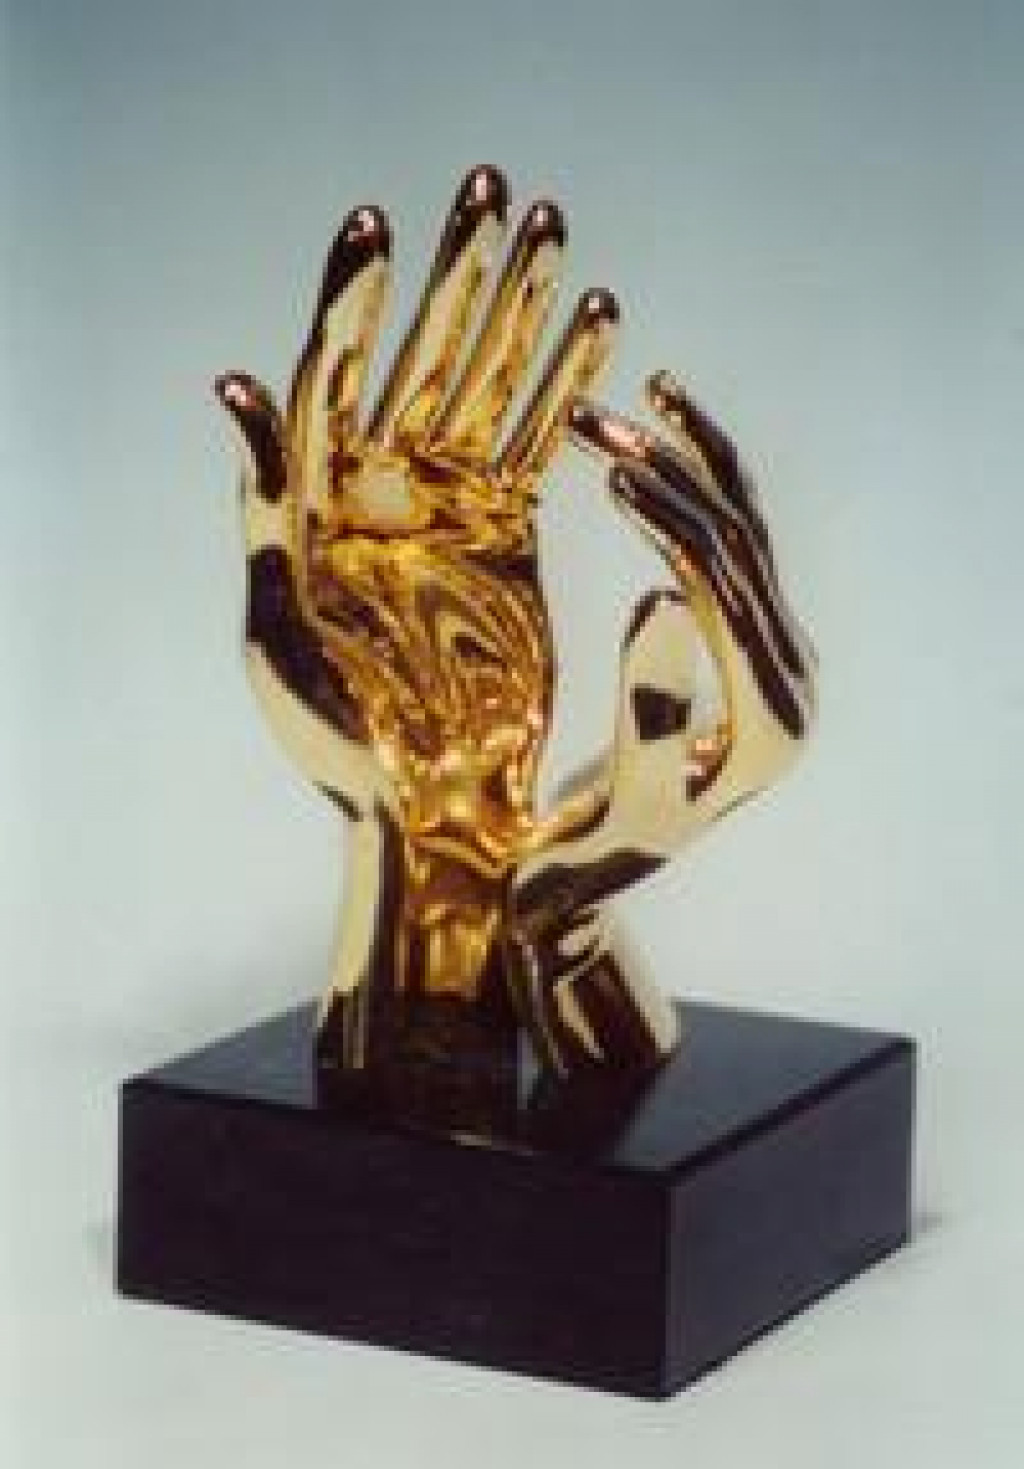 &lt;p&gt;Priznanje &amp;#39; Zlatne ruke= Hrvatske obrtničke komore&lt;/p&gt;